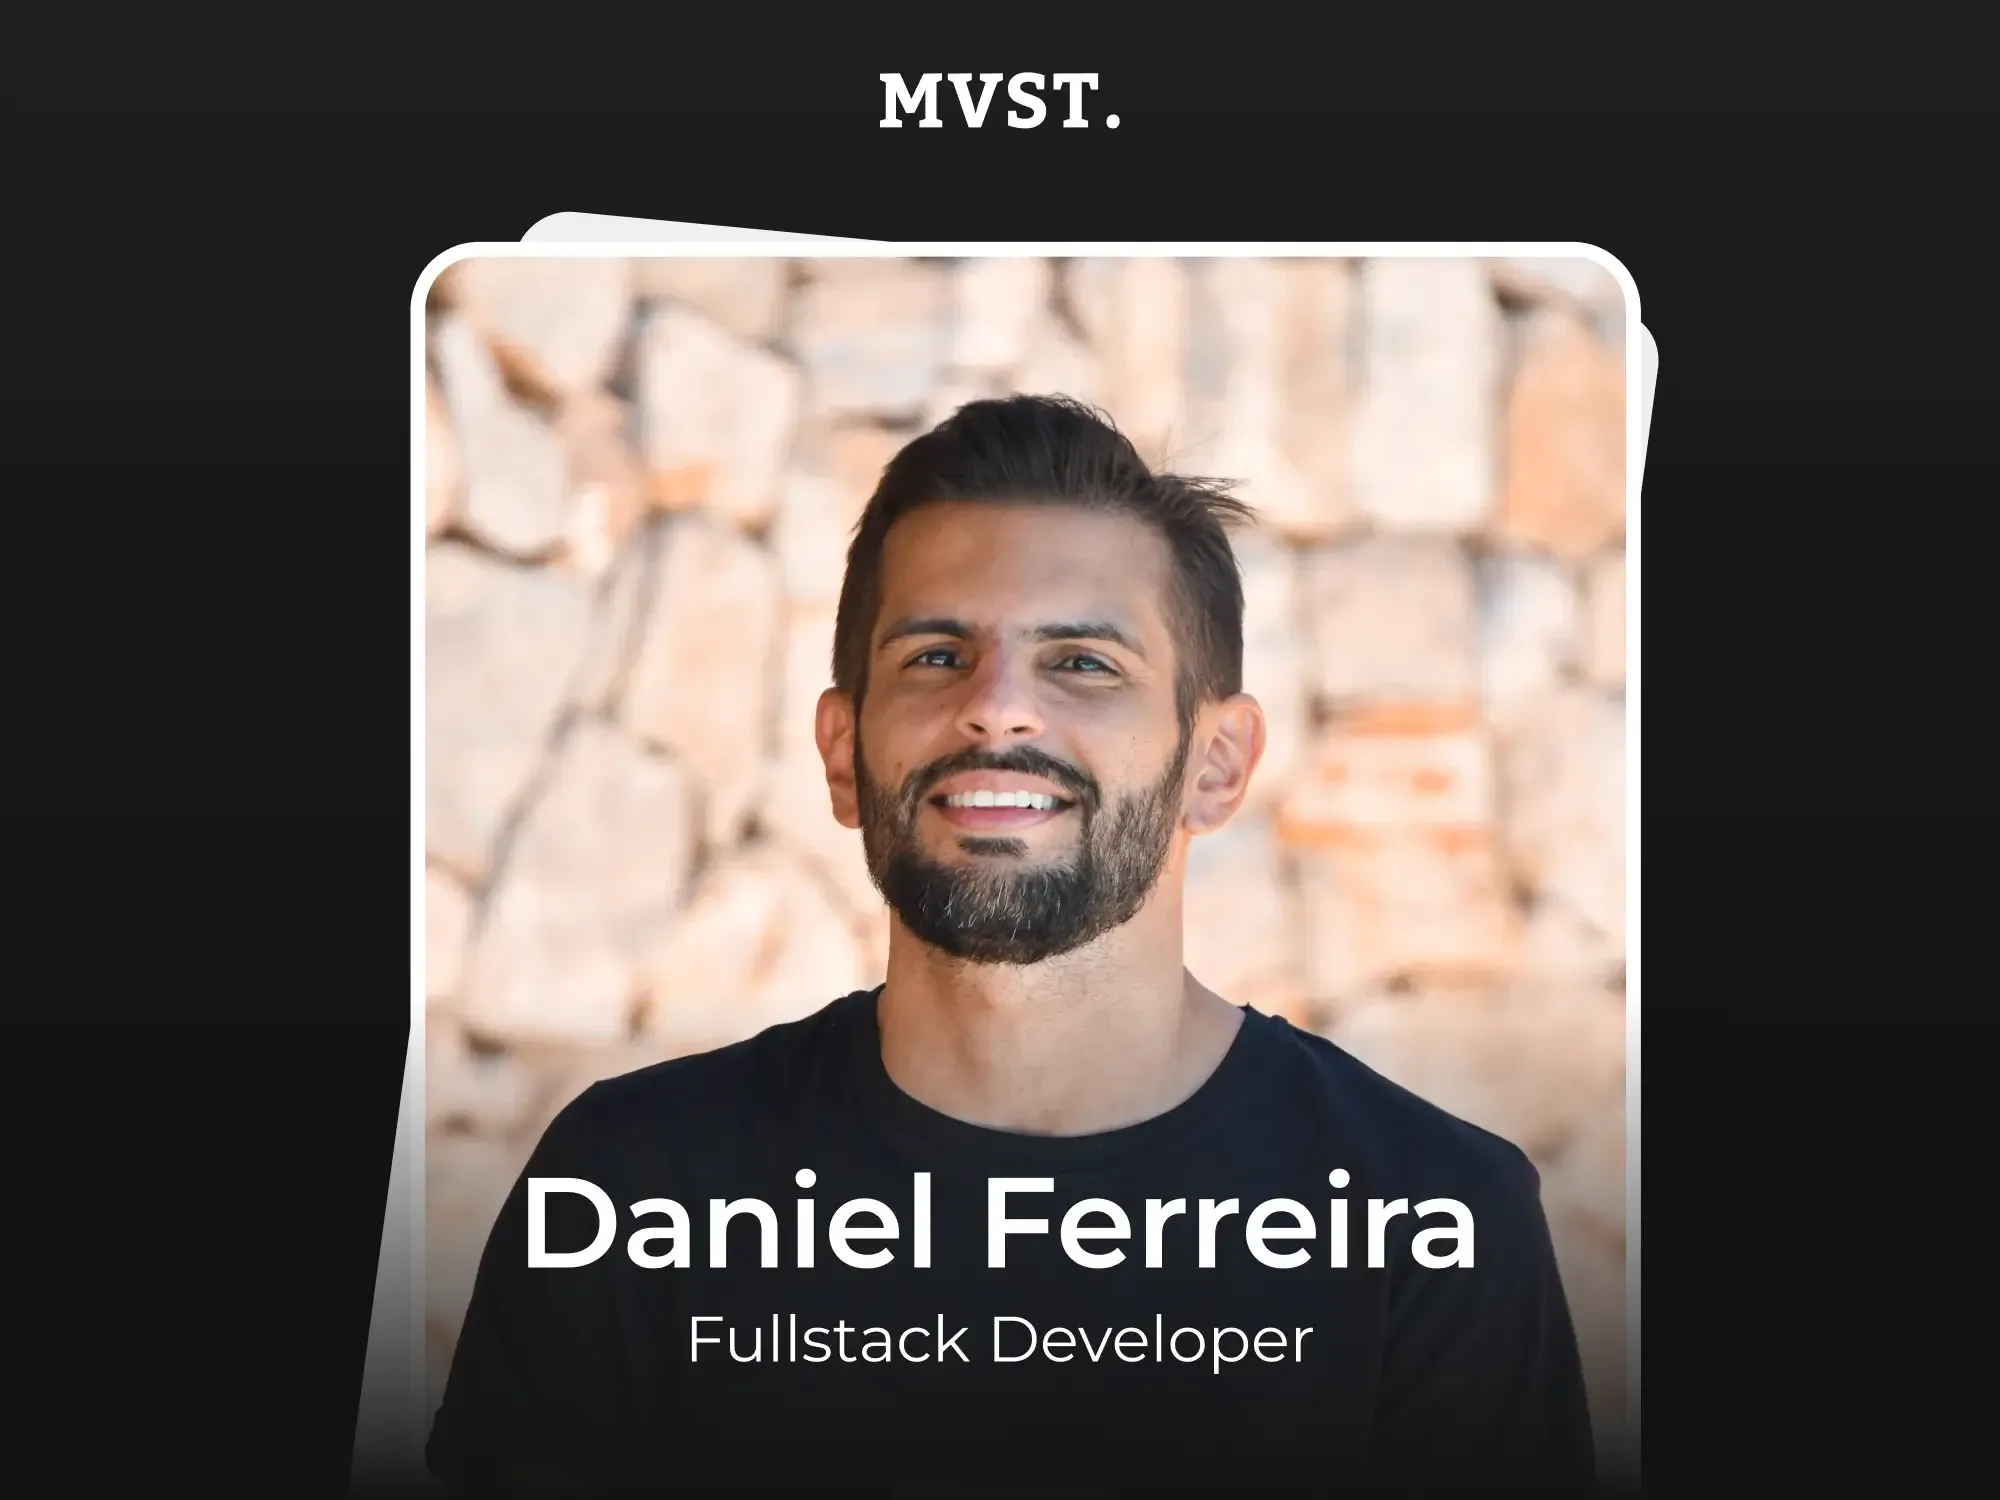 Welcome to MVST, Daniel!